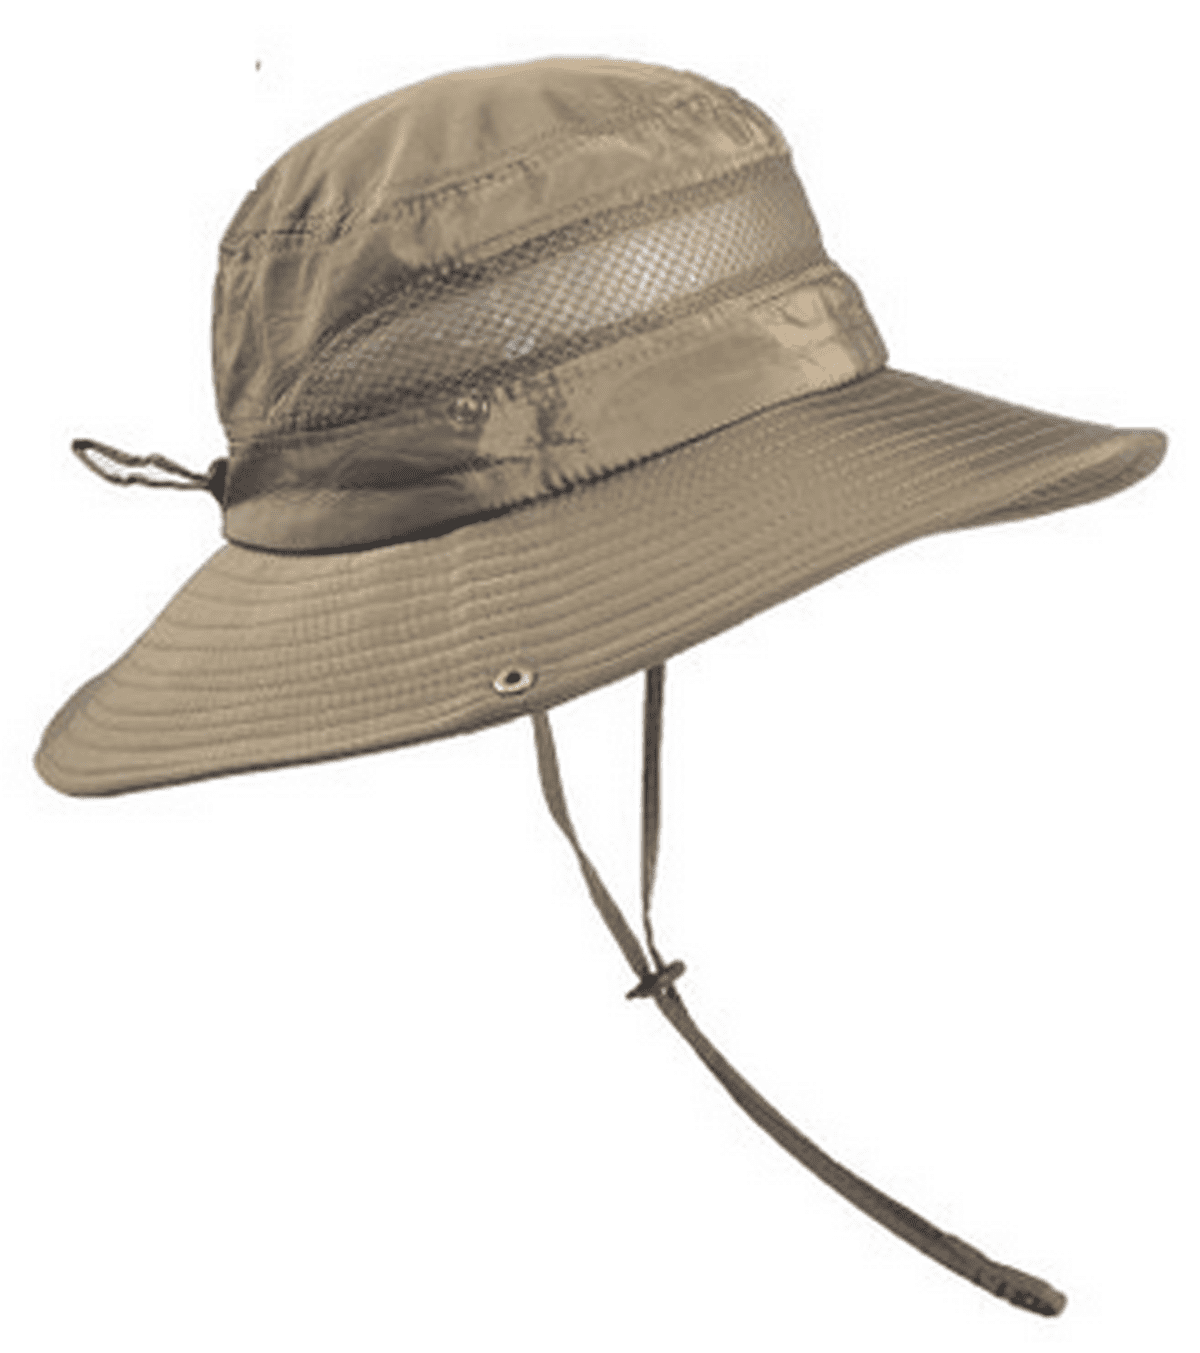 ZAXARRA Unisex Summer Bucket Hat Outdoor Fishing Hunting Visor Cap